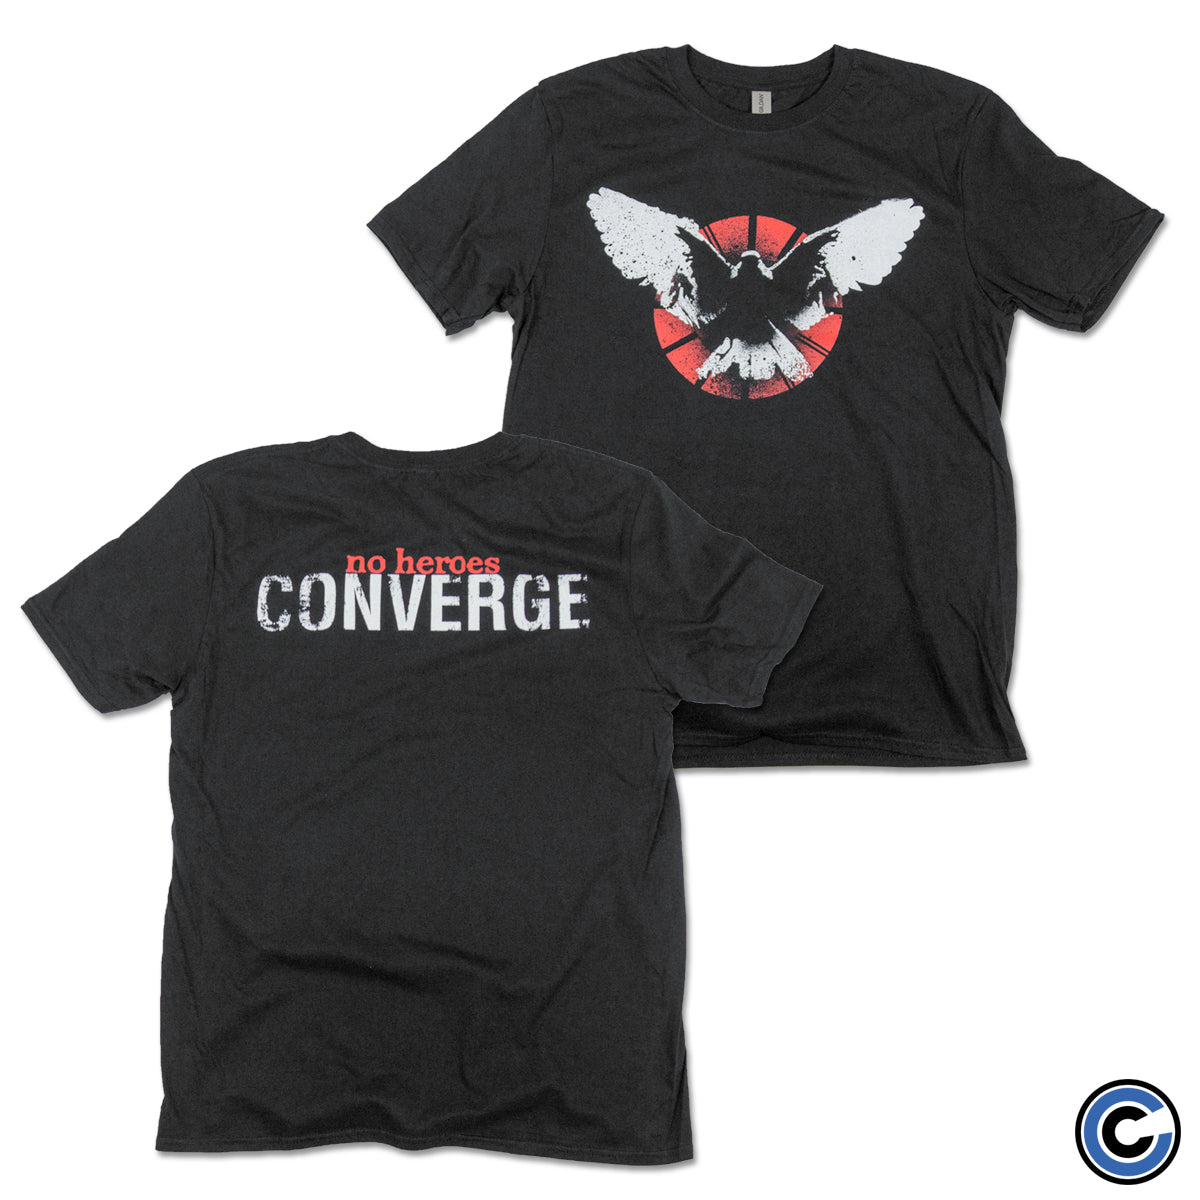 Converge "No Heroes" Shirt